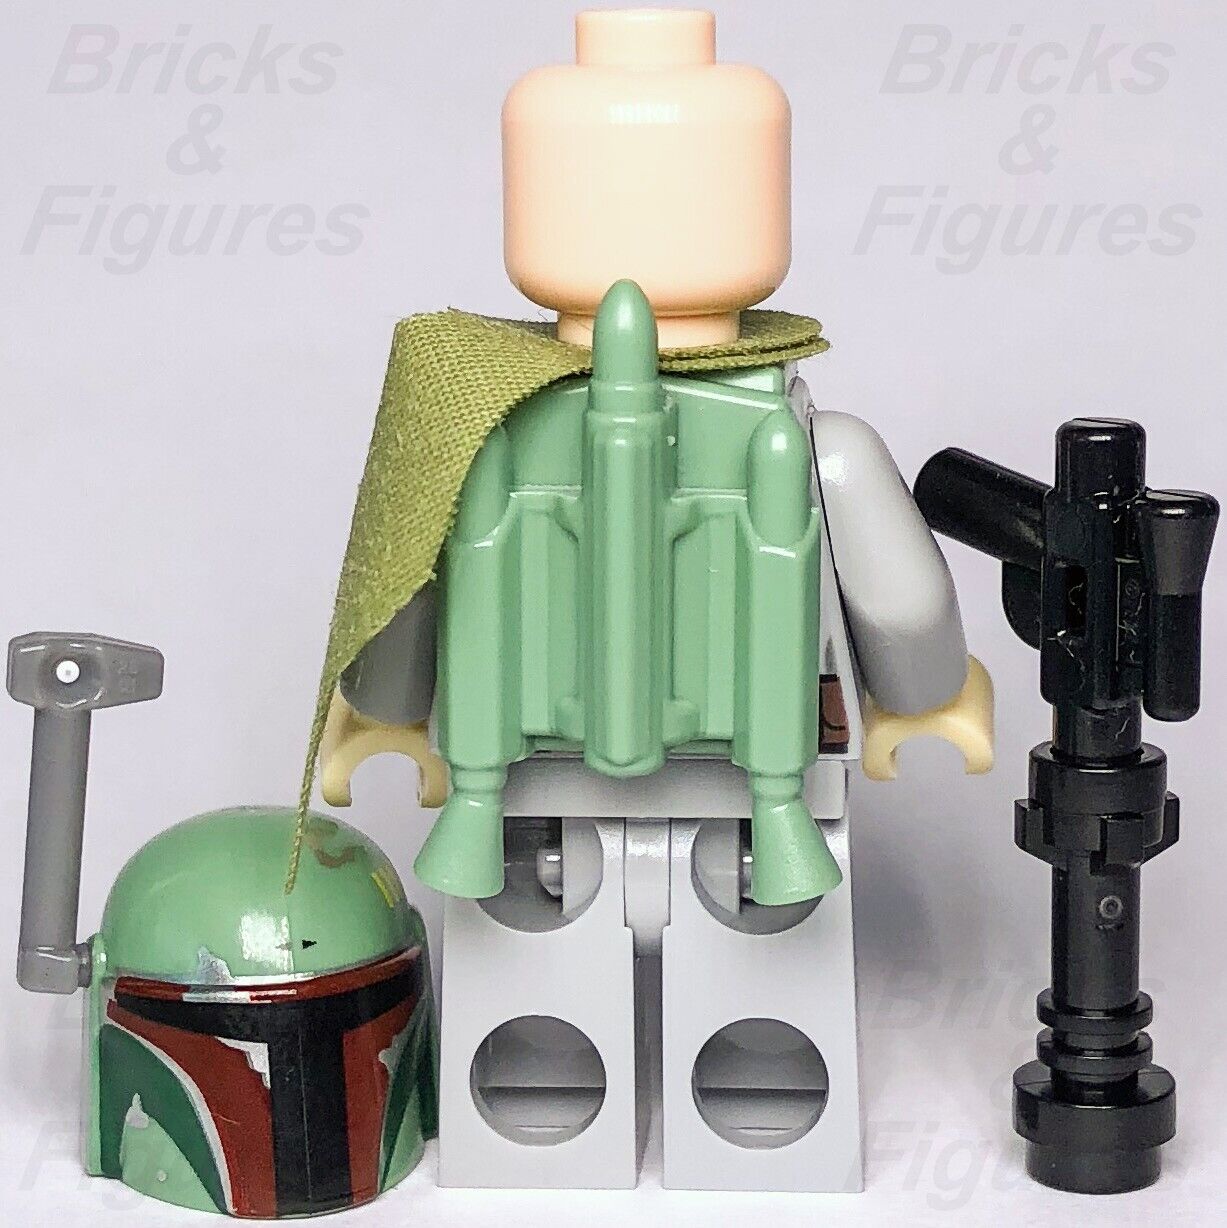 LEGO Star Wars Boba Fett Mandalorian Bounty Hunter 75174 slave 1 pilot sw0822 - Bricks & Figures